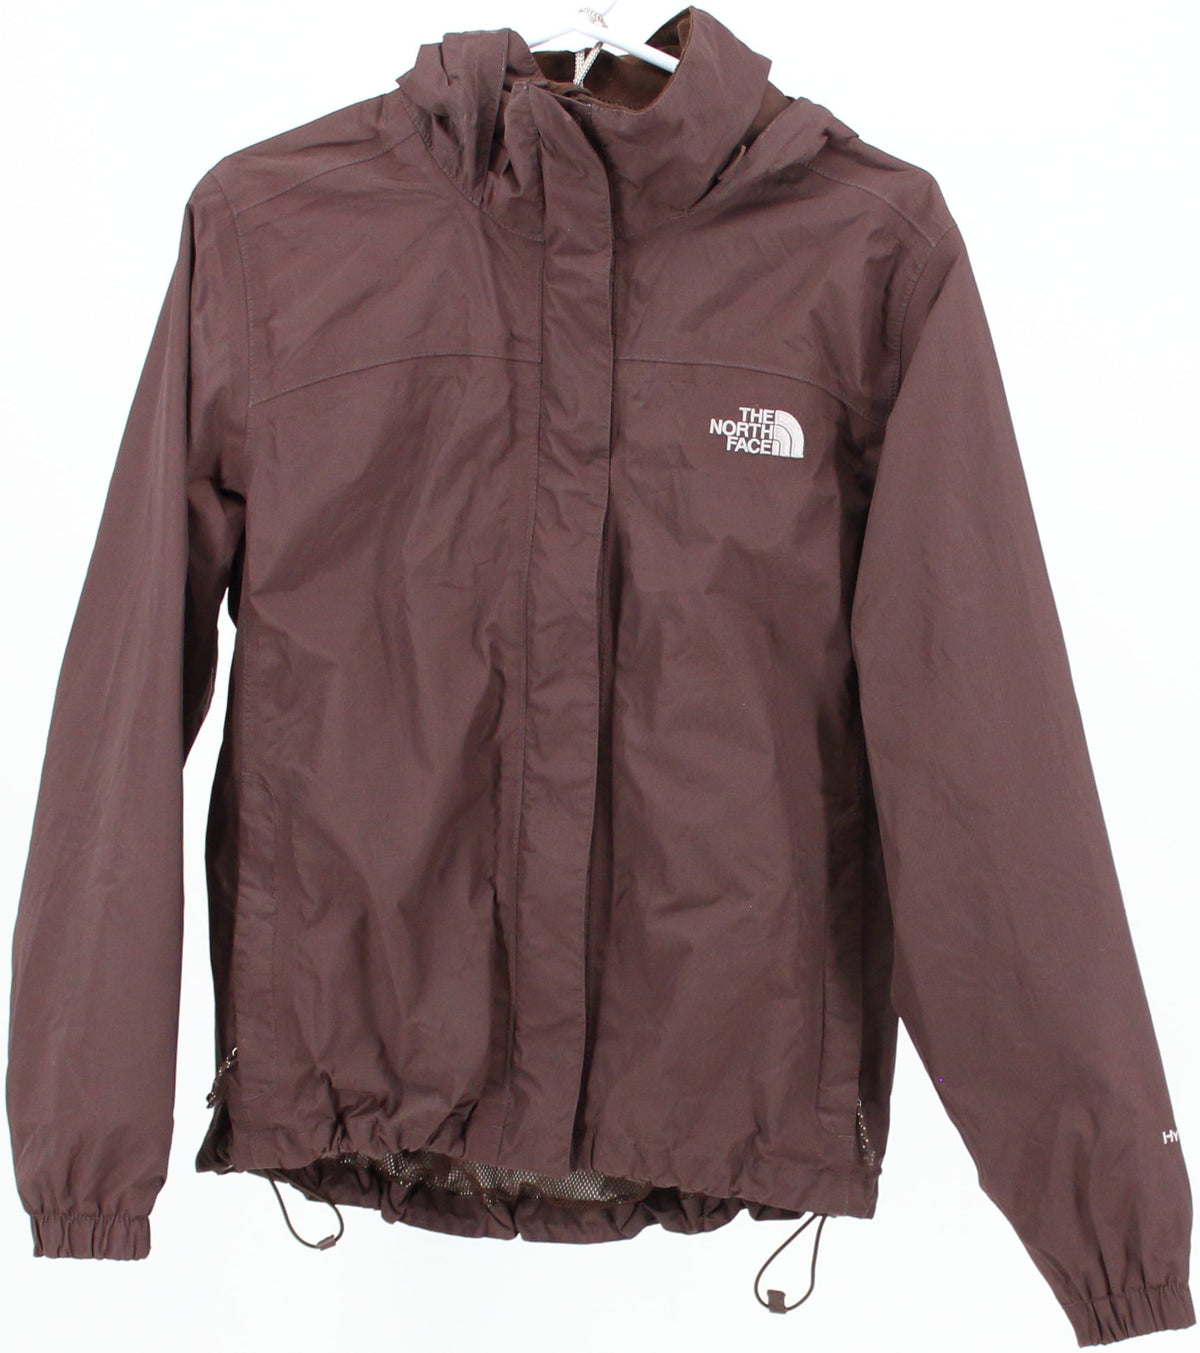 The North Face Women's Brown Windbreaker Jacket